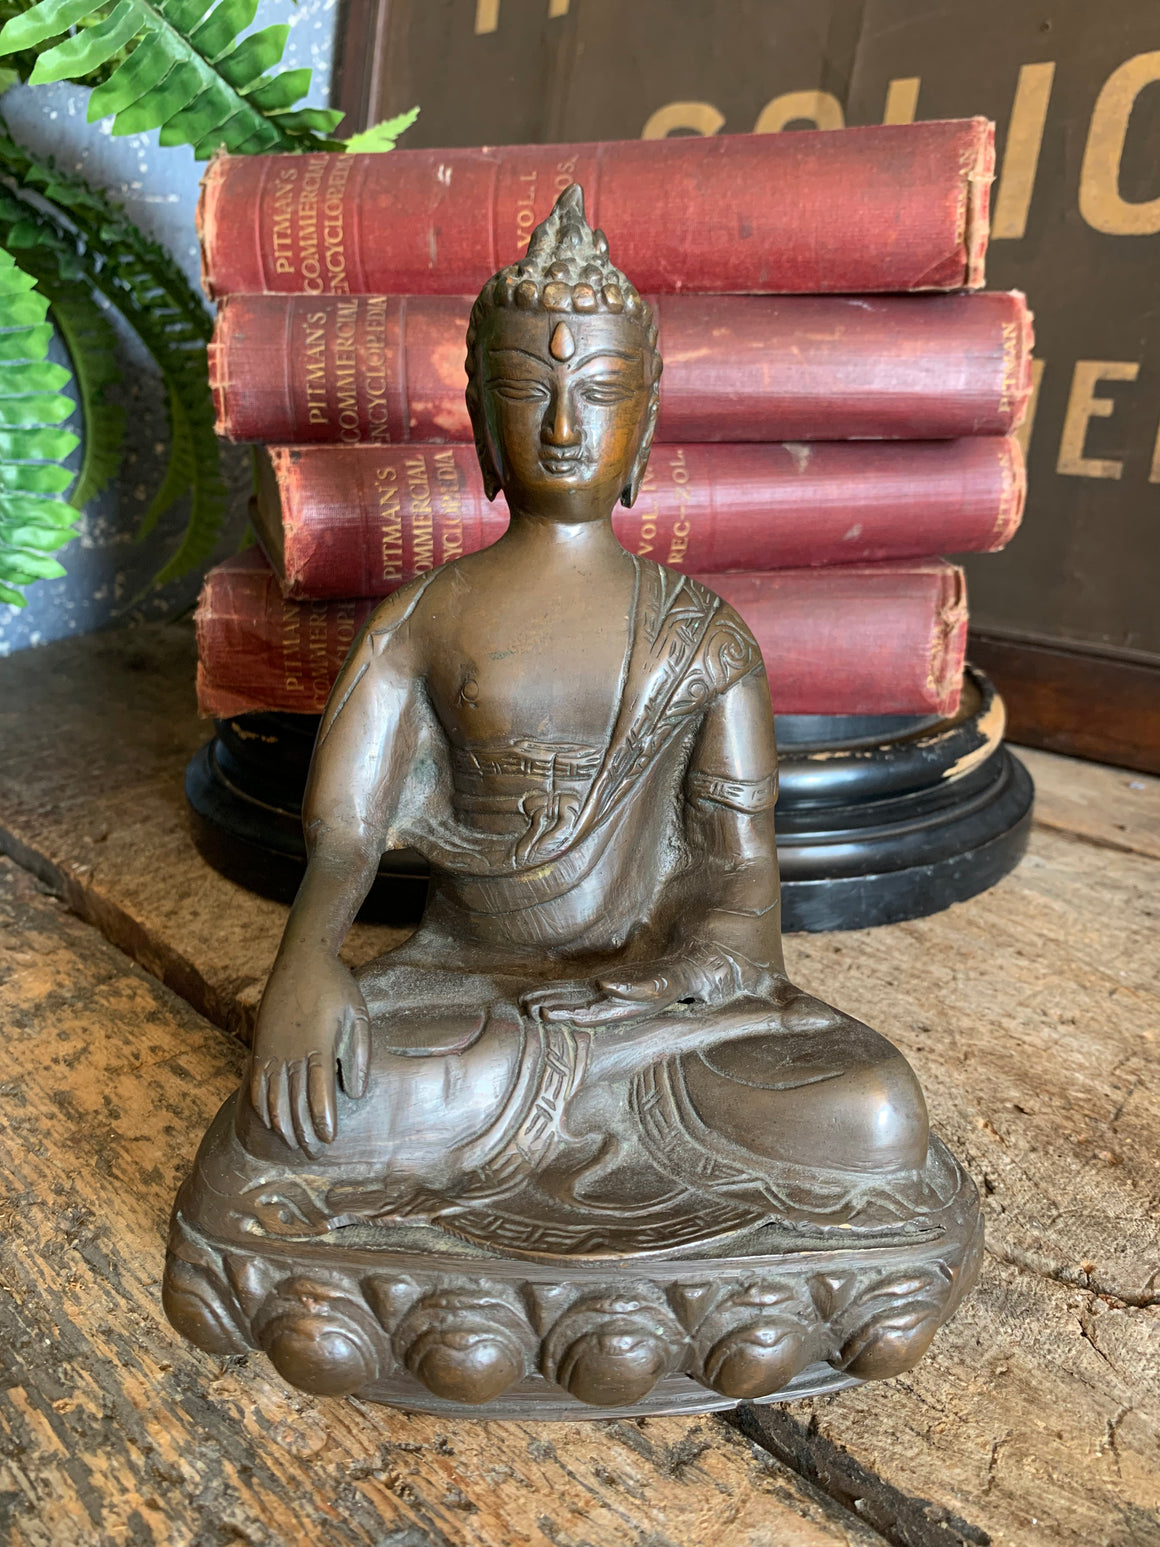 A bronze seated Buddha figure